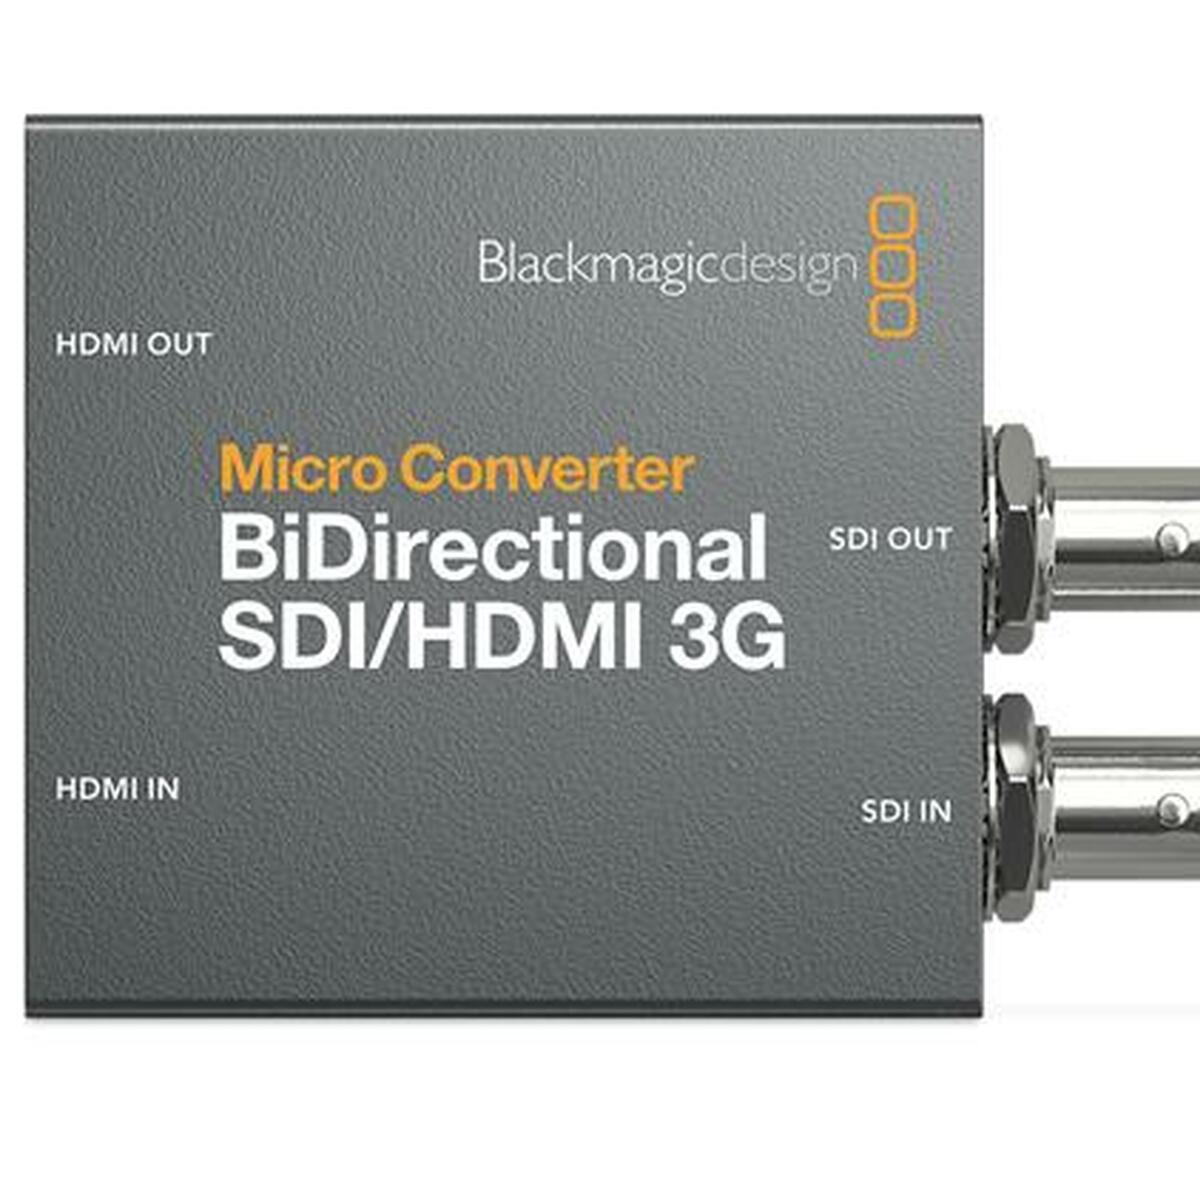 Blackmagic Design  Micro Converter BiDirectional SDI/HDMI  3G with PS